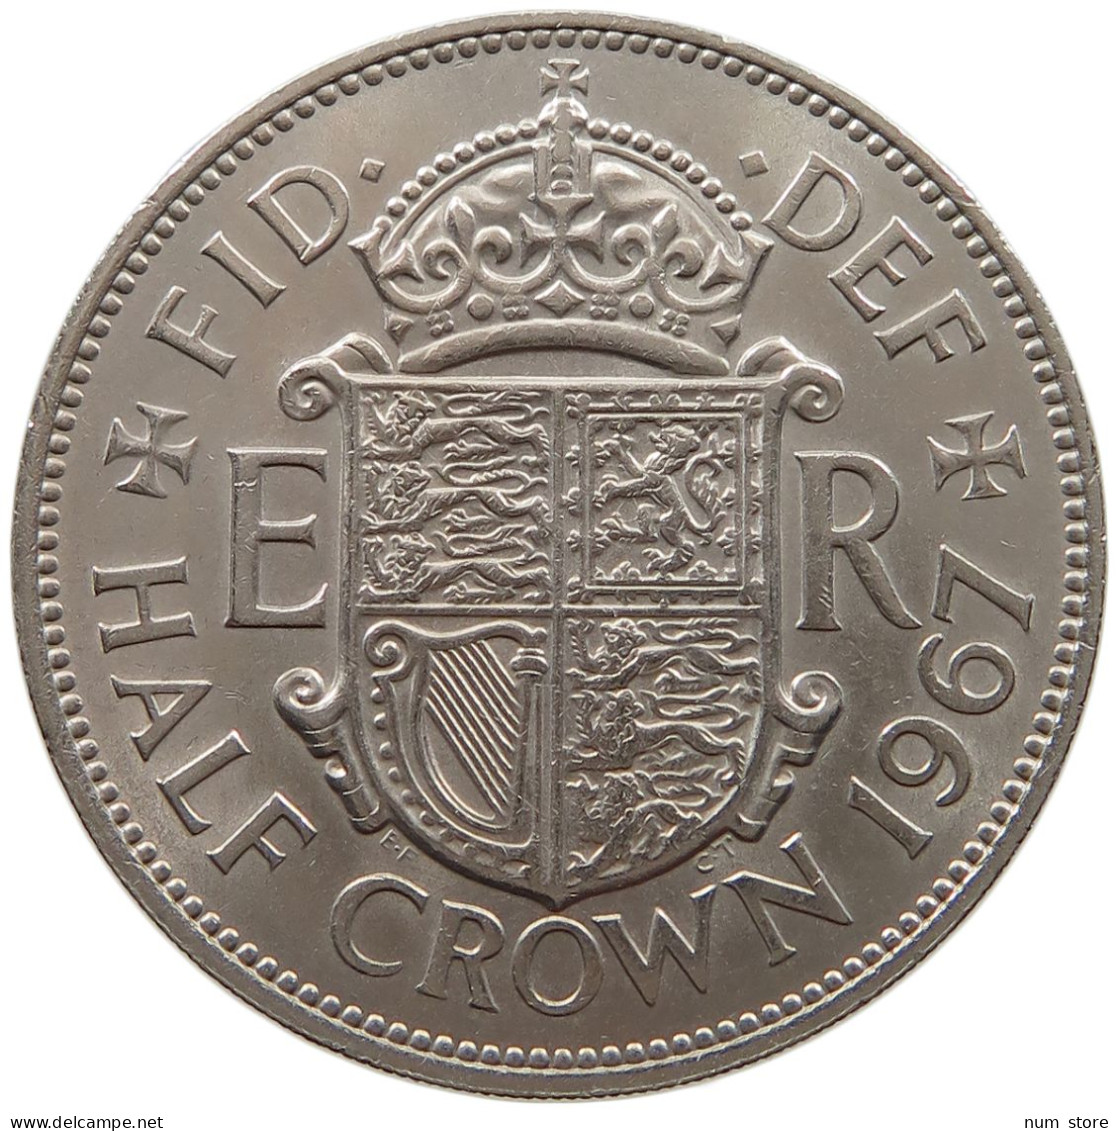 GREAT BRITAIN HALF CROWN 1967 Elisabeth II. (1952-) #a069 0517 - K. 1/2 Crown